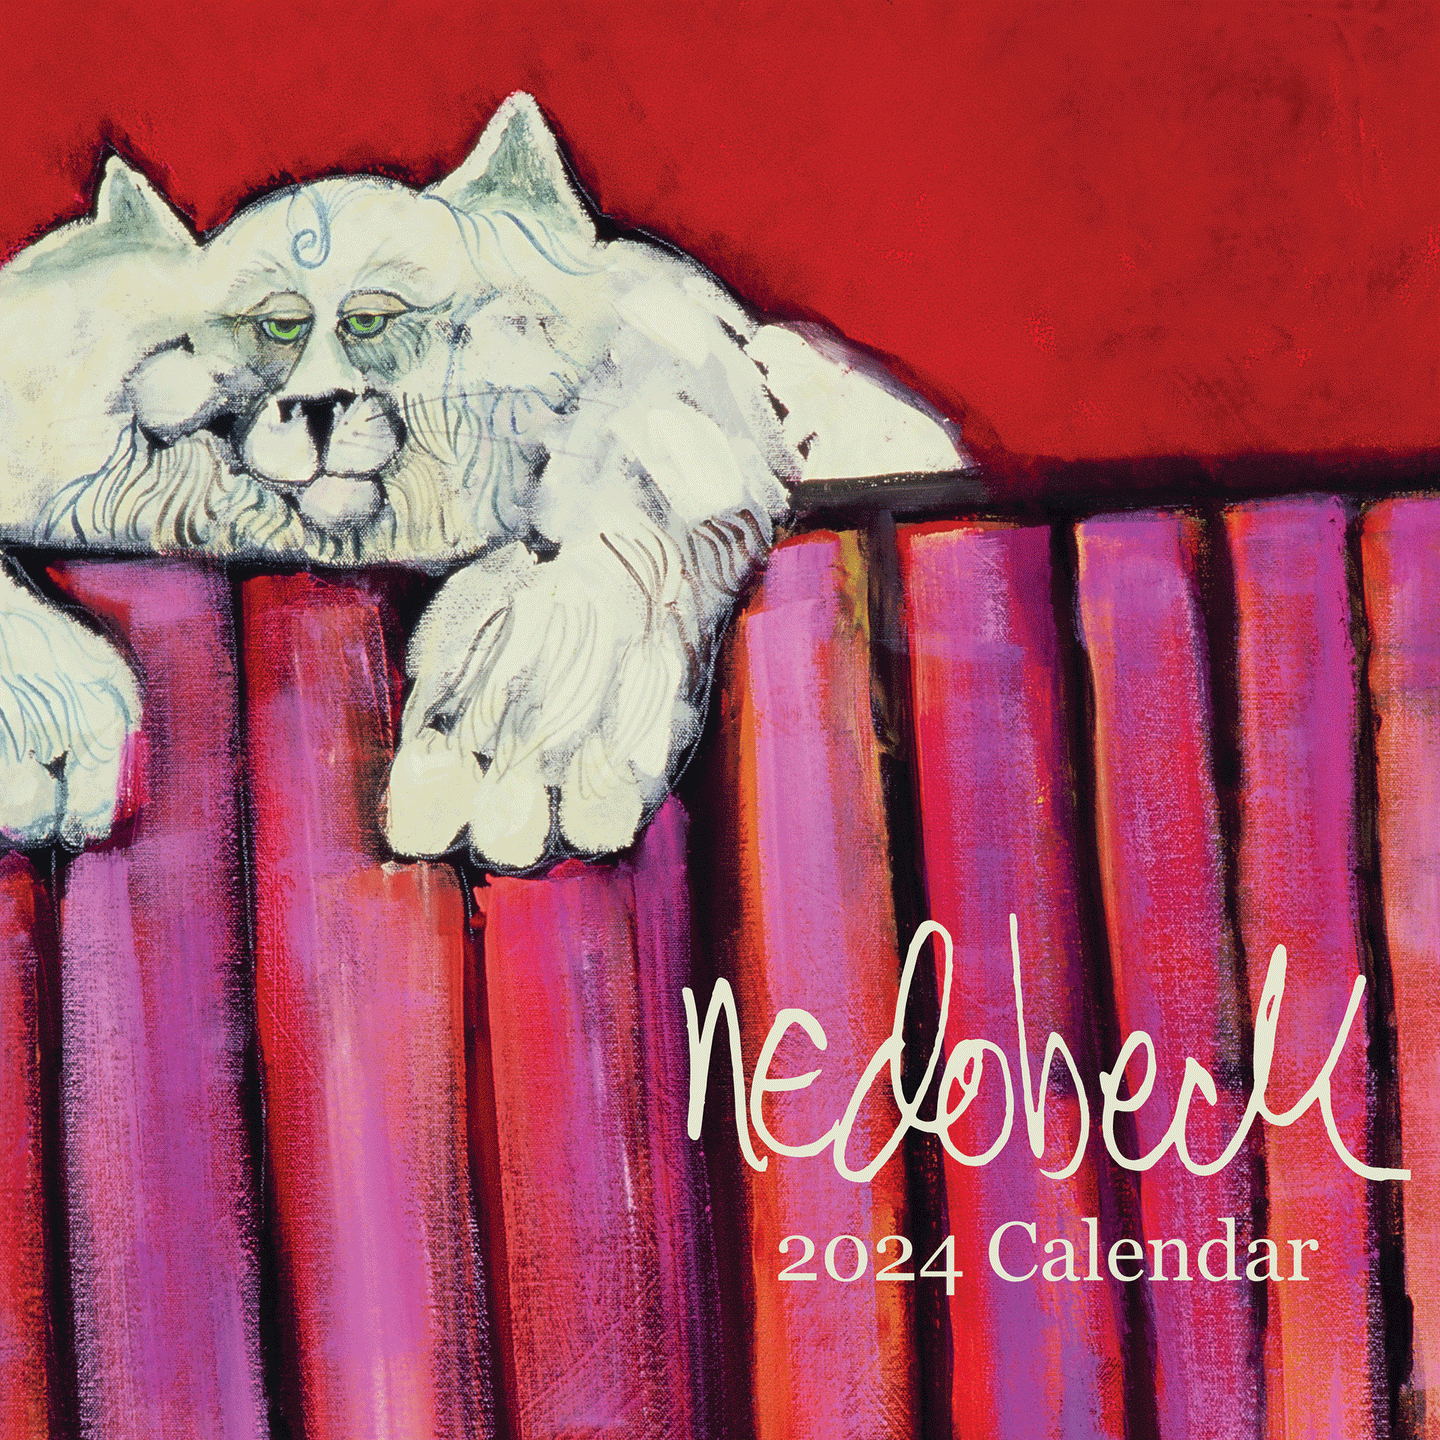 Nedobeck's 2024 Calendar